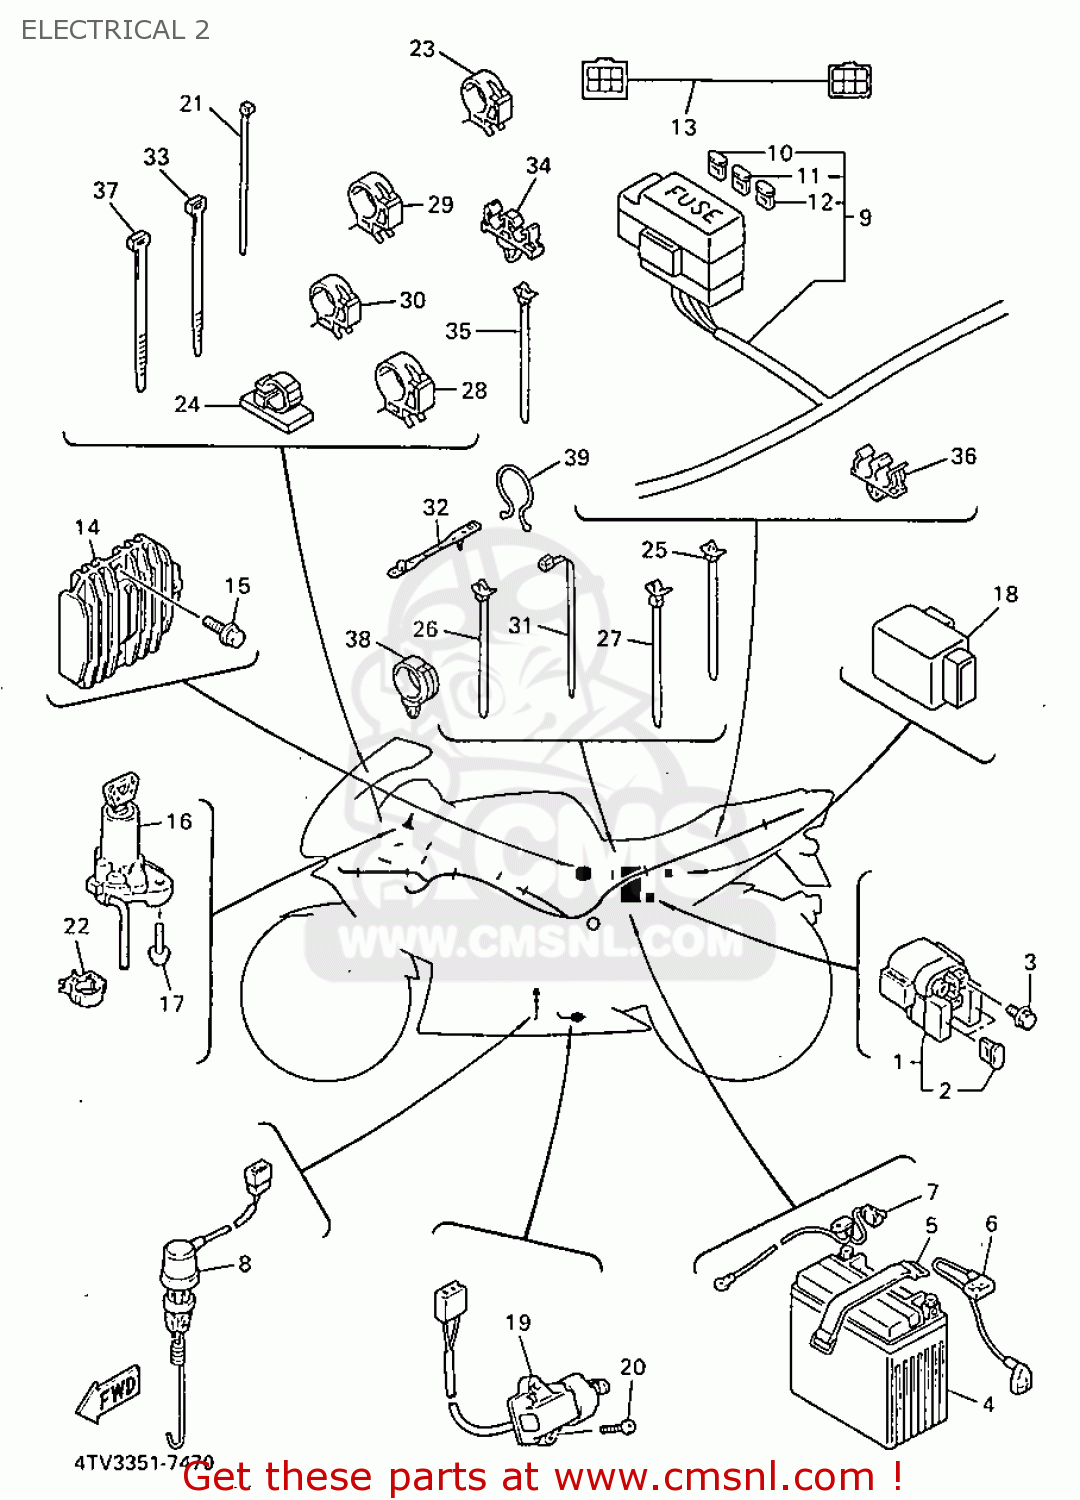 yamaha yzf600 wiring diagram yamaha motorcycle wiring diagrams navigate your 2004 yamaha  